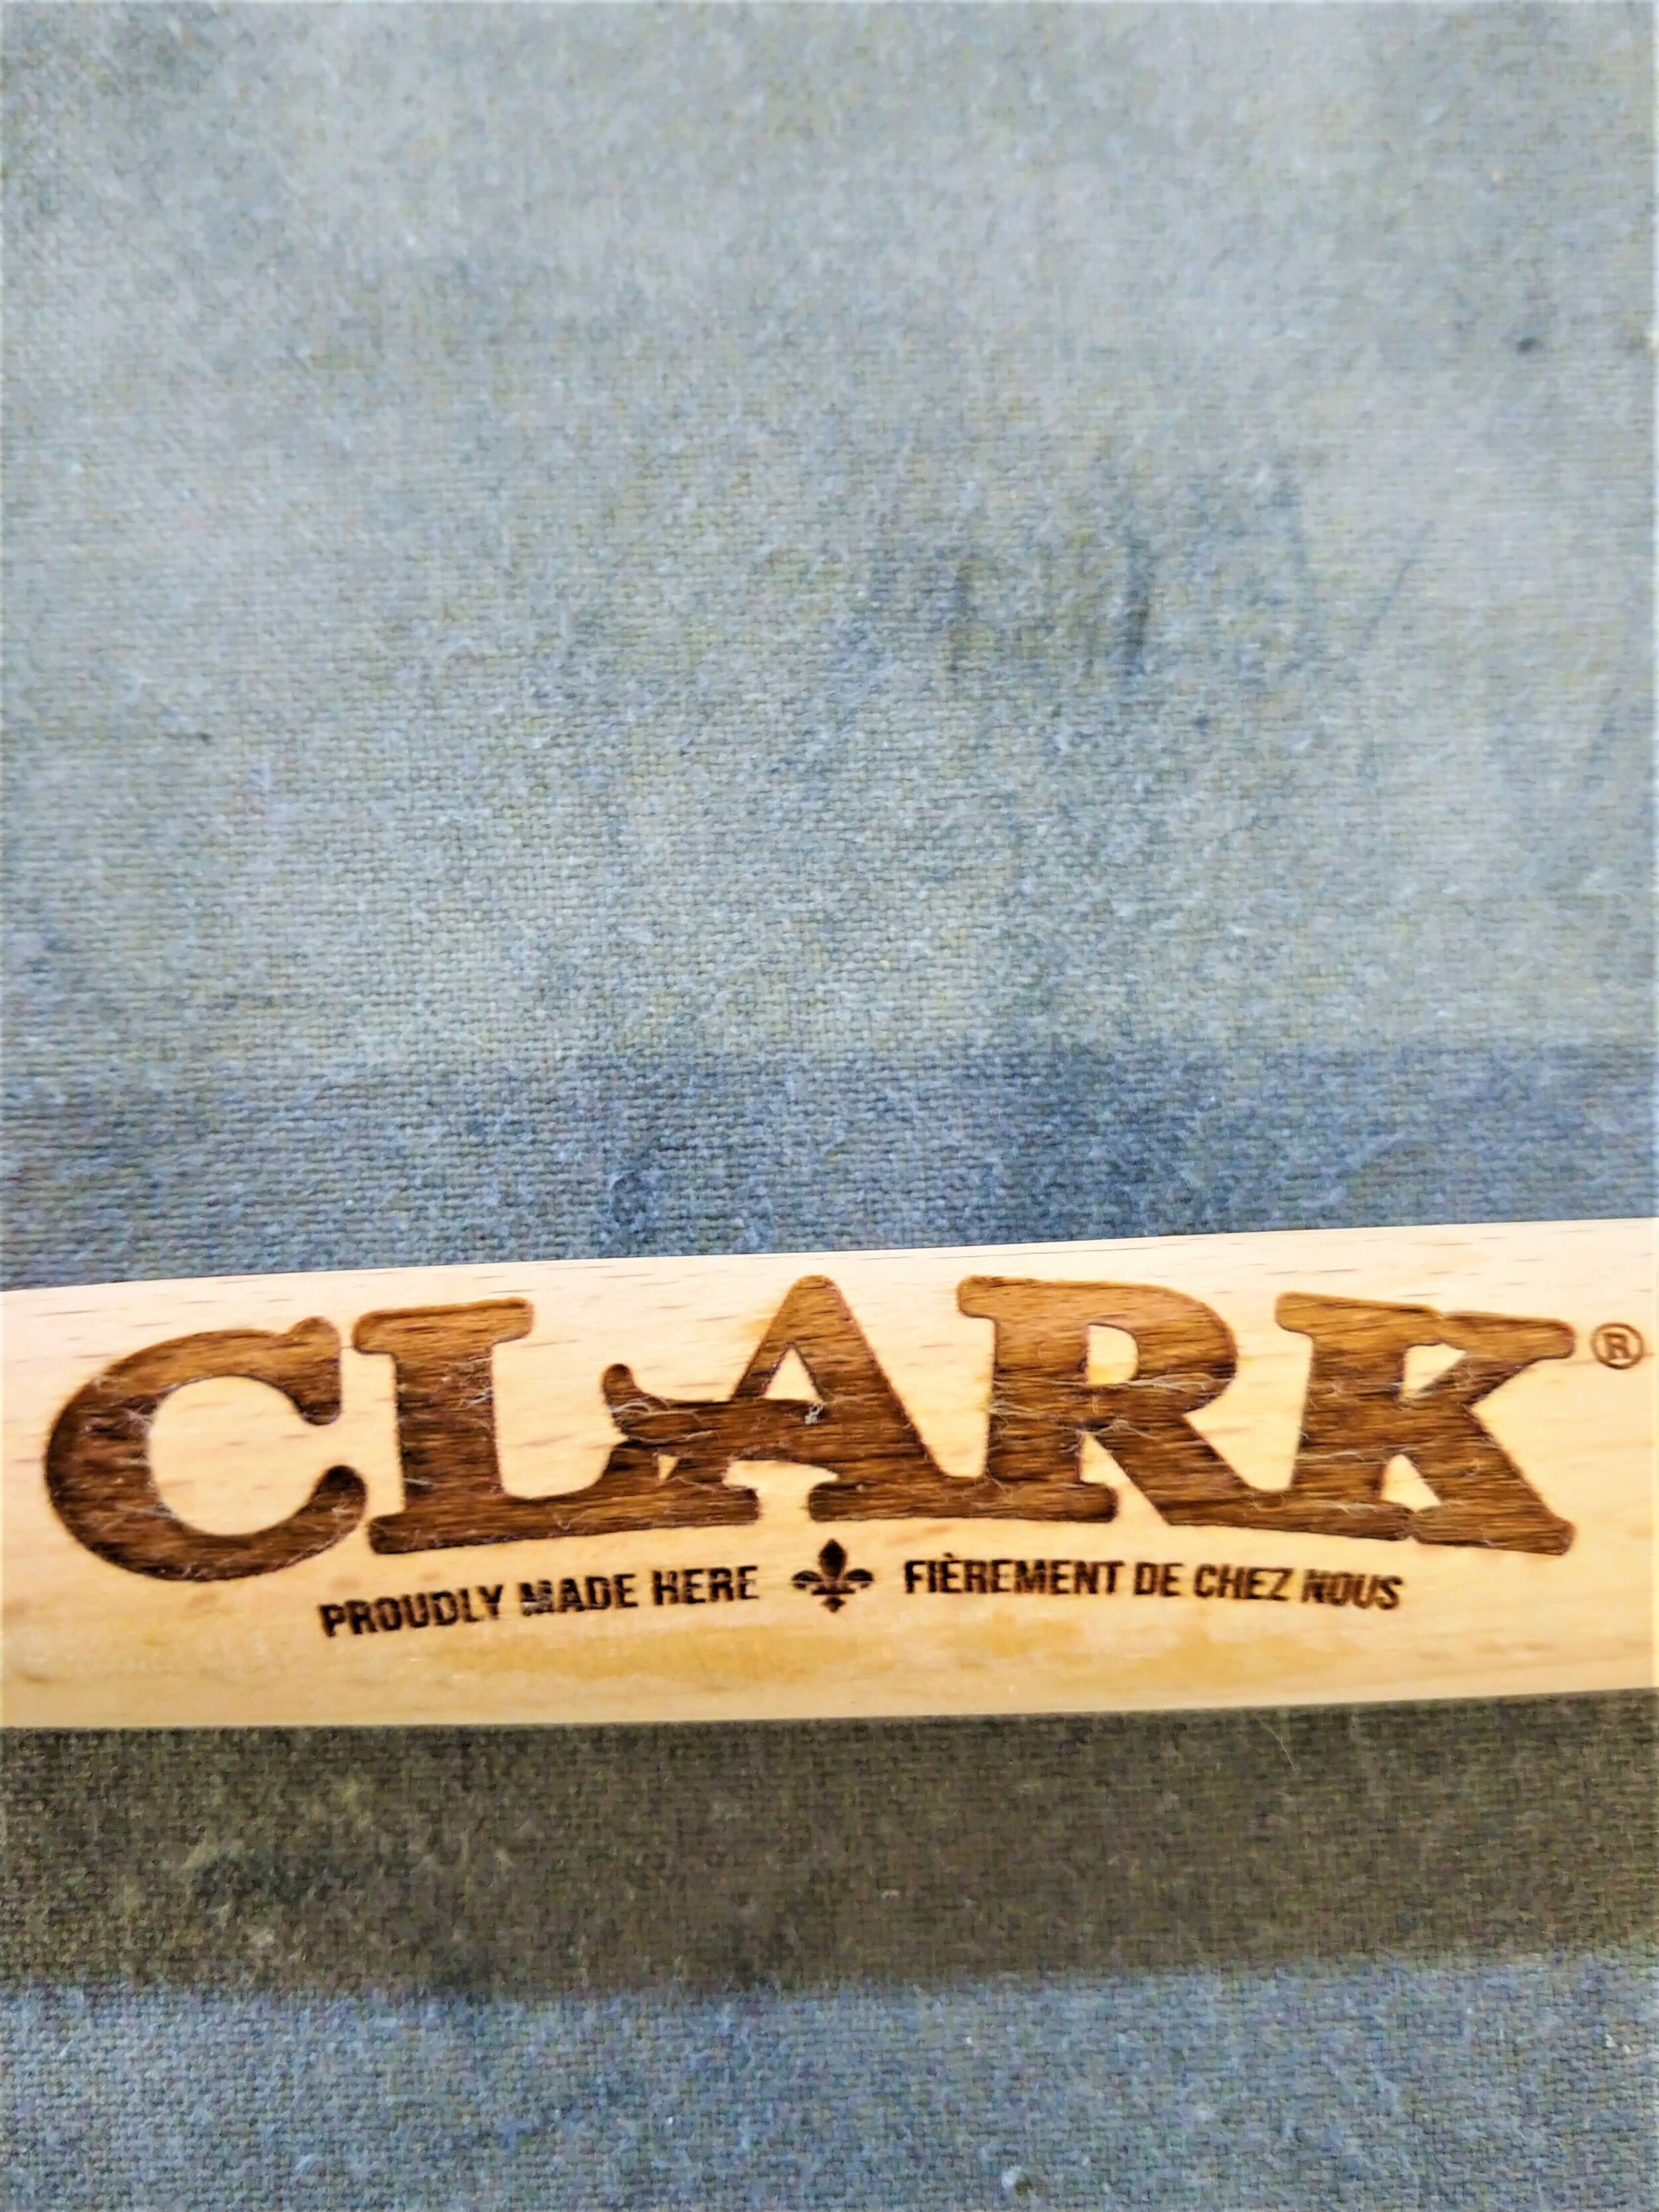 Wood laser engraving for trade marks